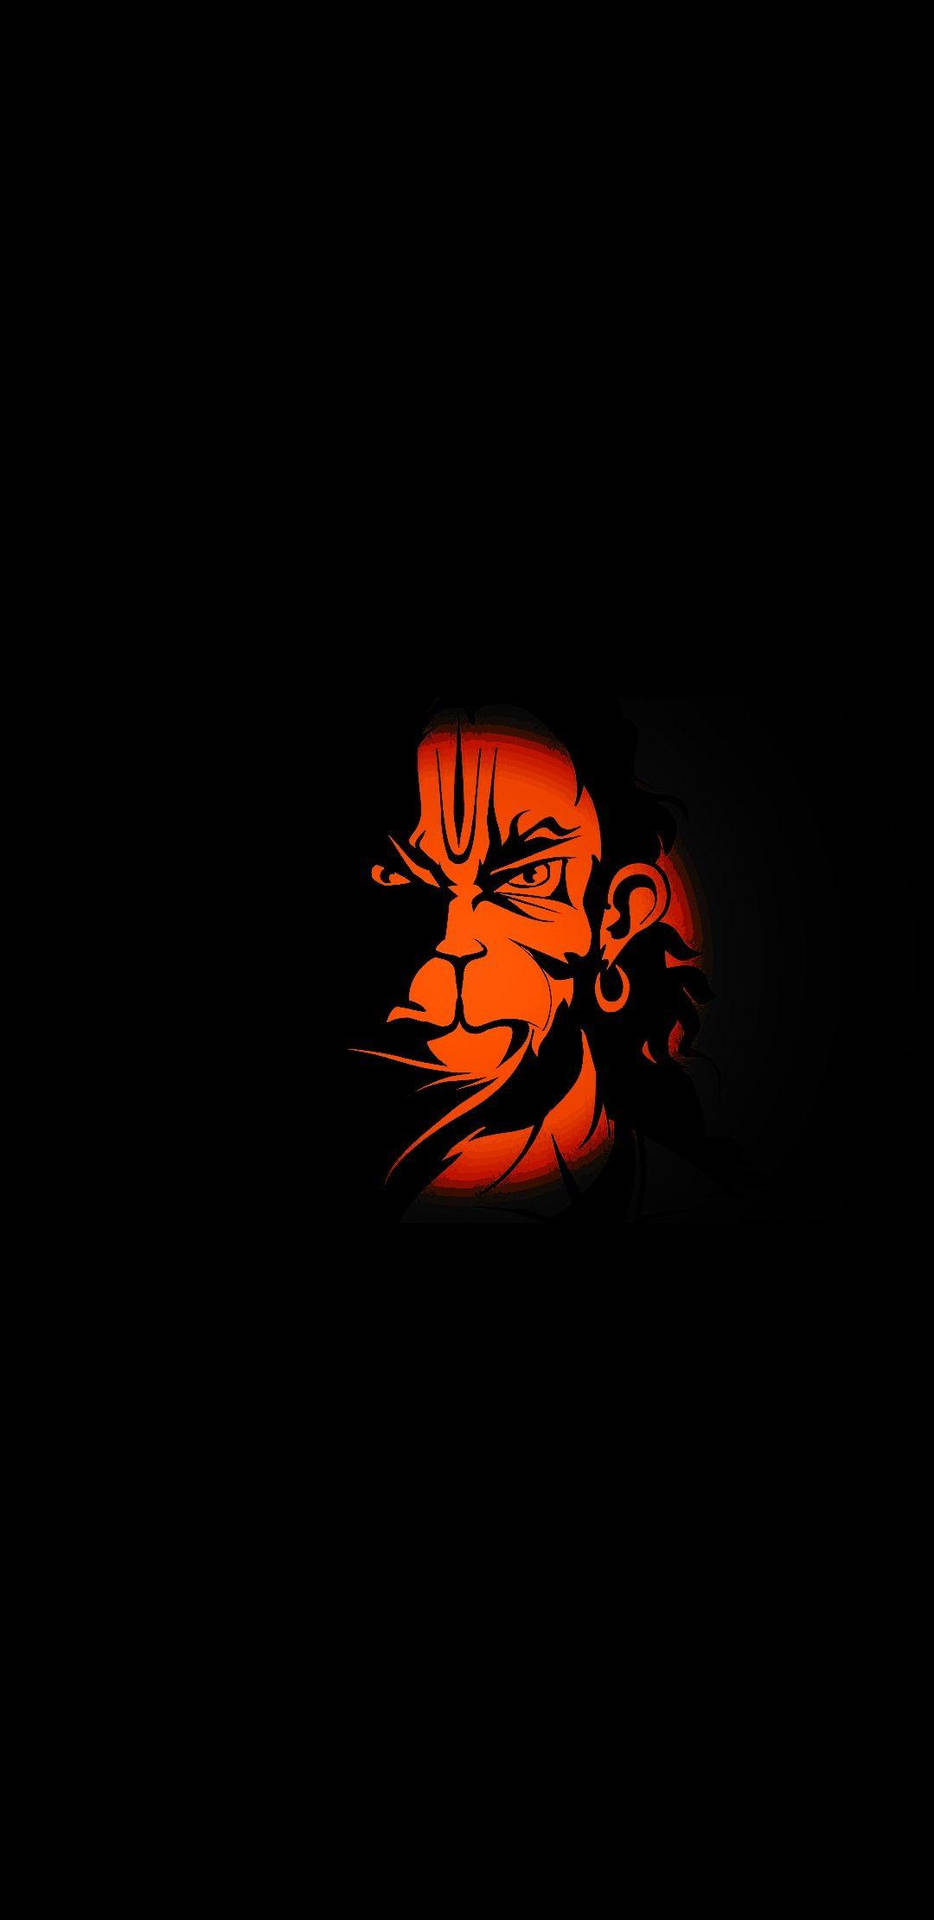 hanuman wallpaper full HD | Hanuman images